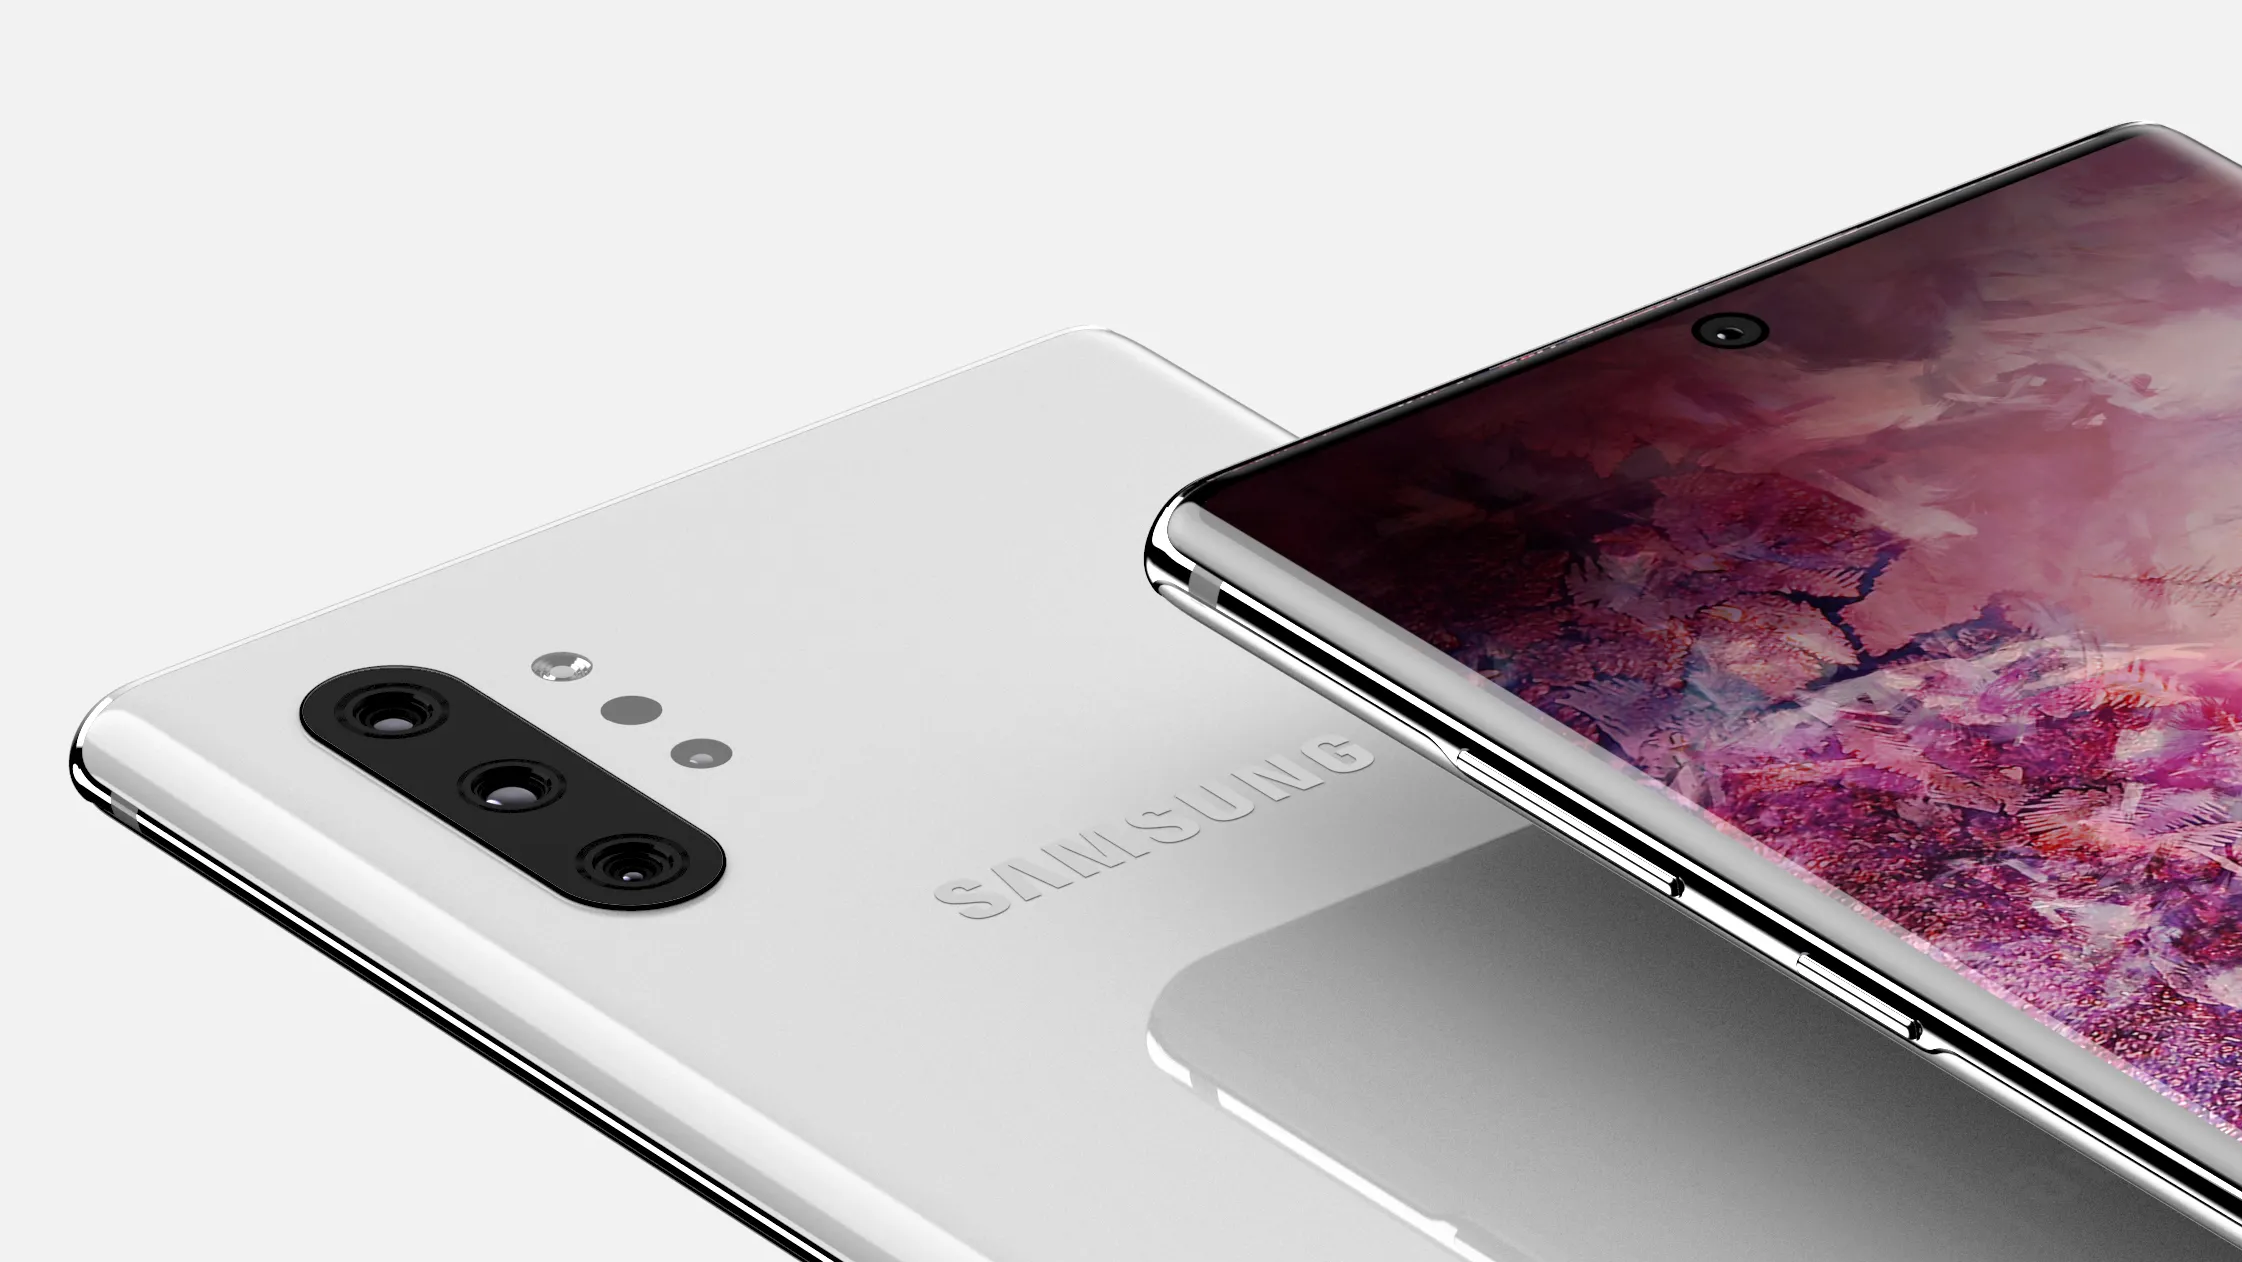 Exclusive: Samsung Galaxy Note 10 Pro renders reveal quad cameras